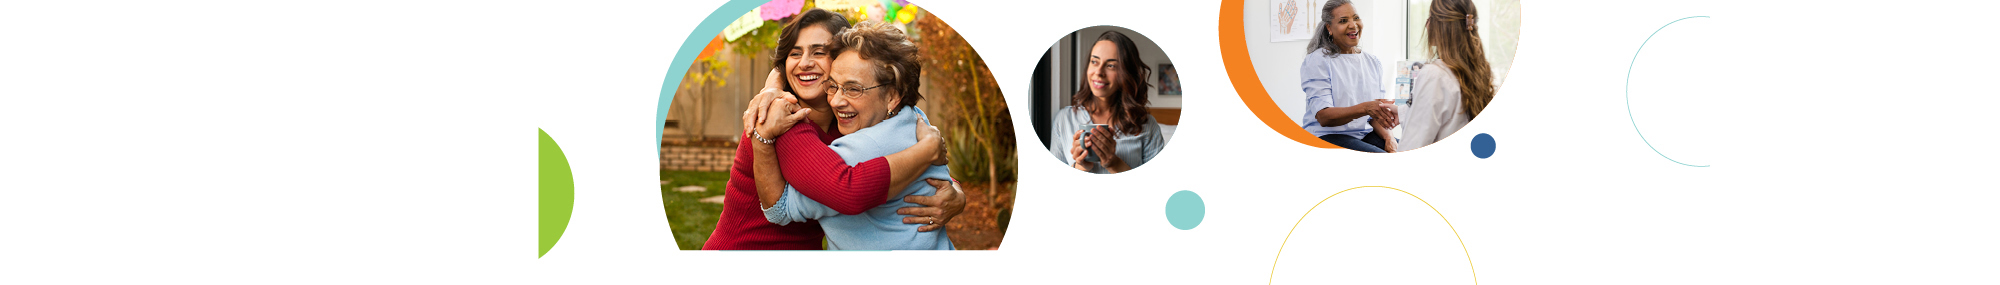 本系列杂志循环发布的新闻包括：dos mujeres abrazadas（izquierda）、una mujer sonriendo y mirando por una ventana（centro）和una mujer hablando con un provedor de atención médica（derecha）。